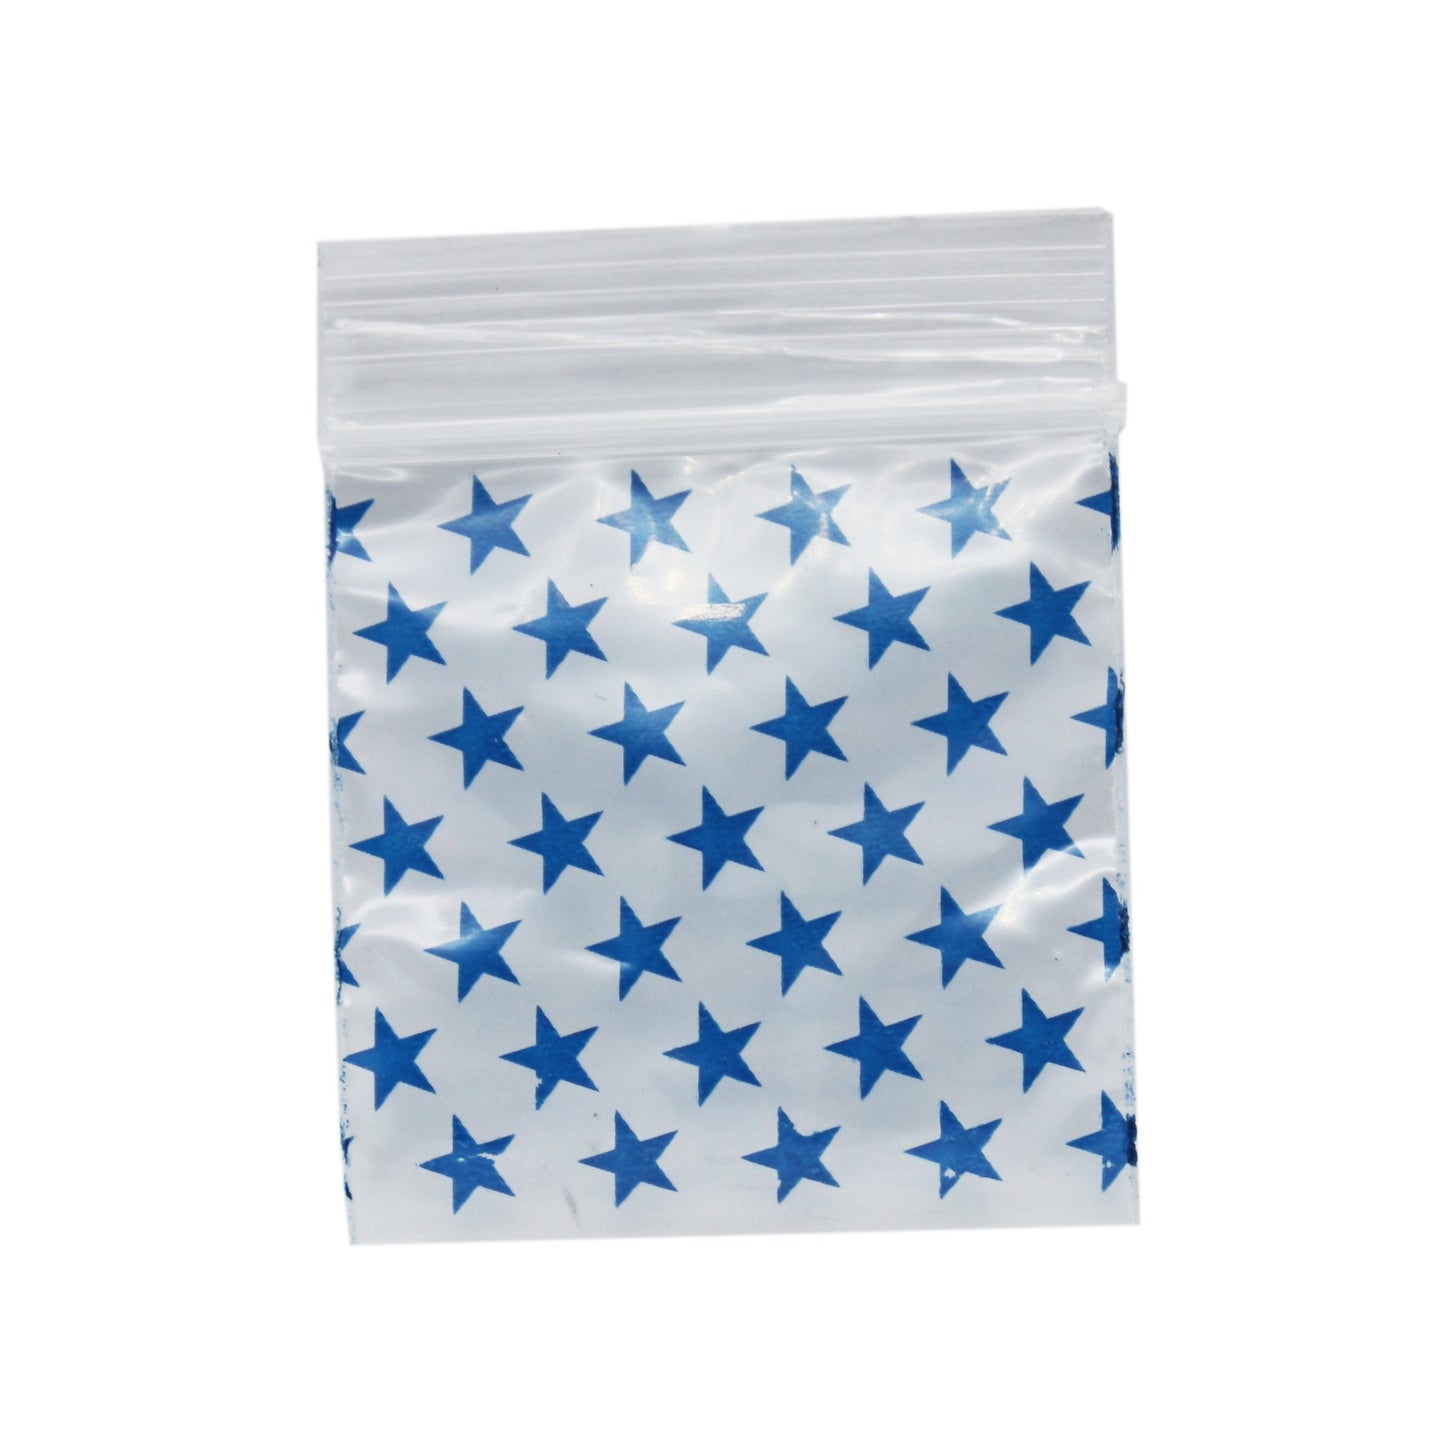 Blue Star Bag 51mm x 51mm - Plastic Bag - BongsMart Australia